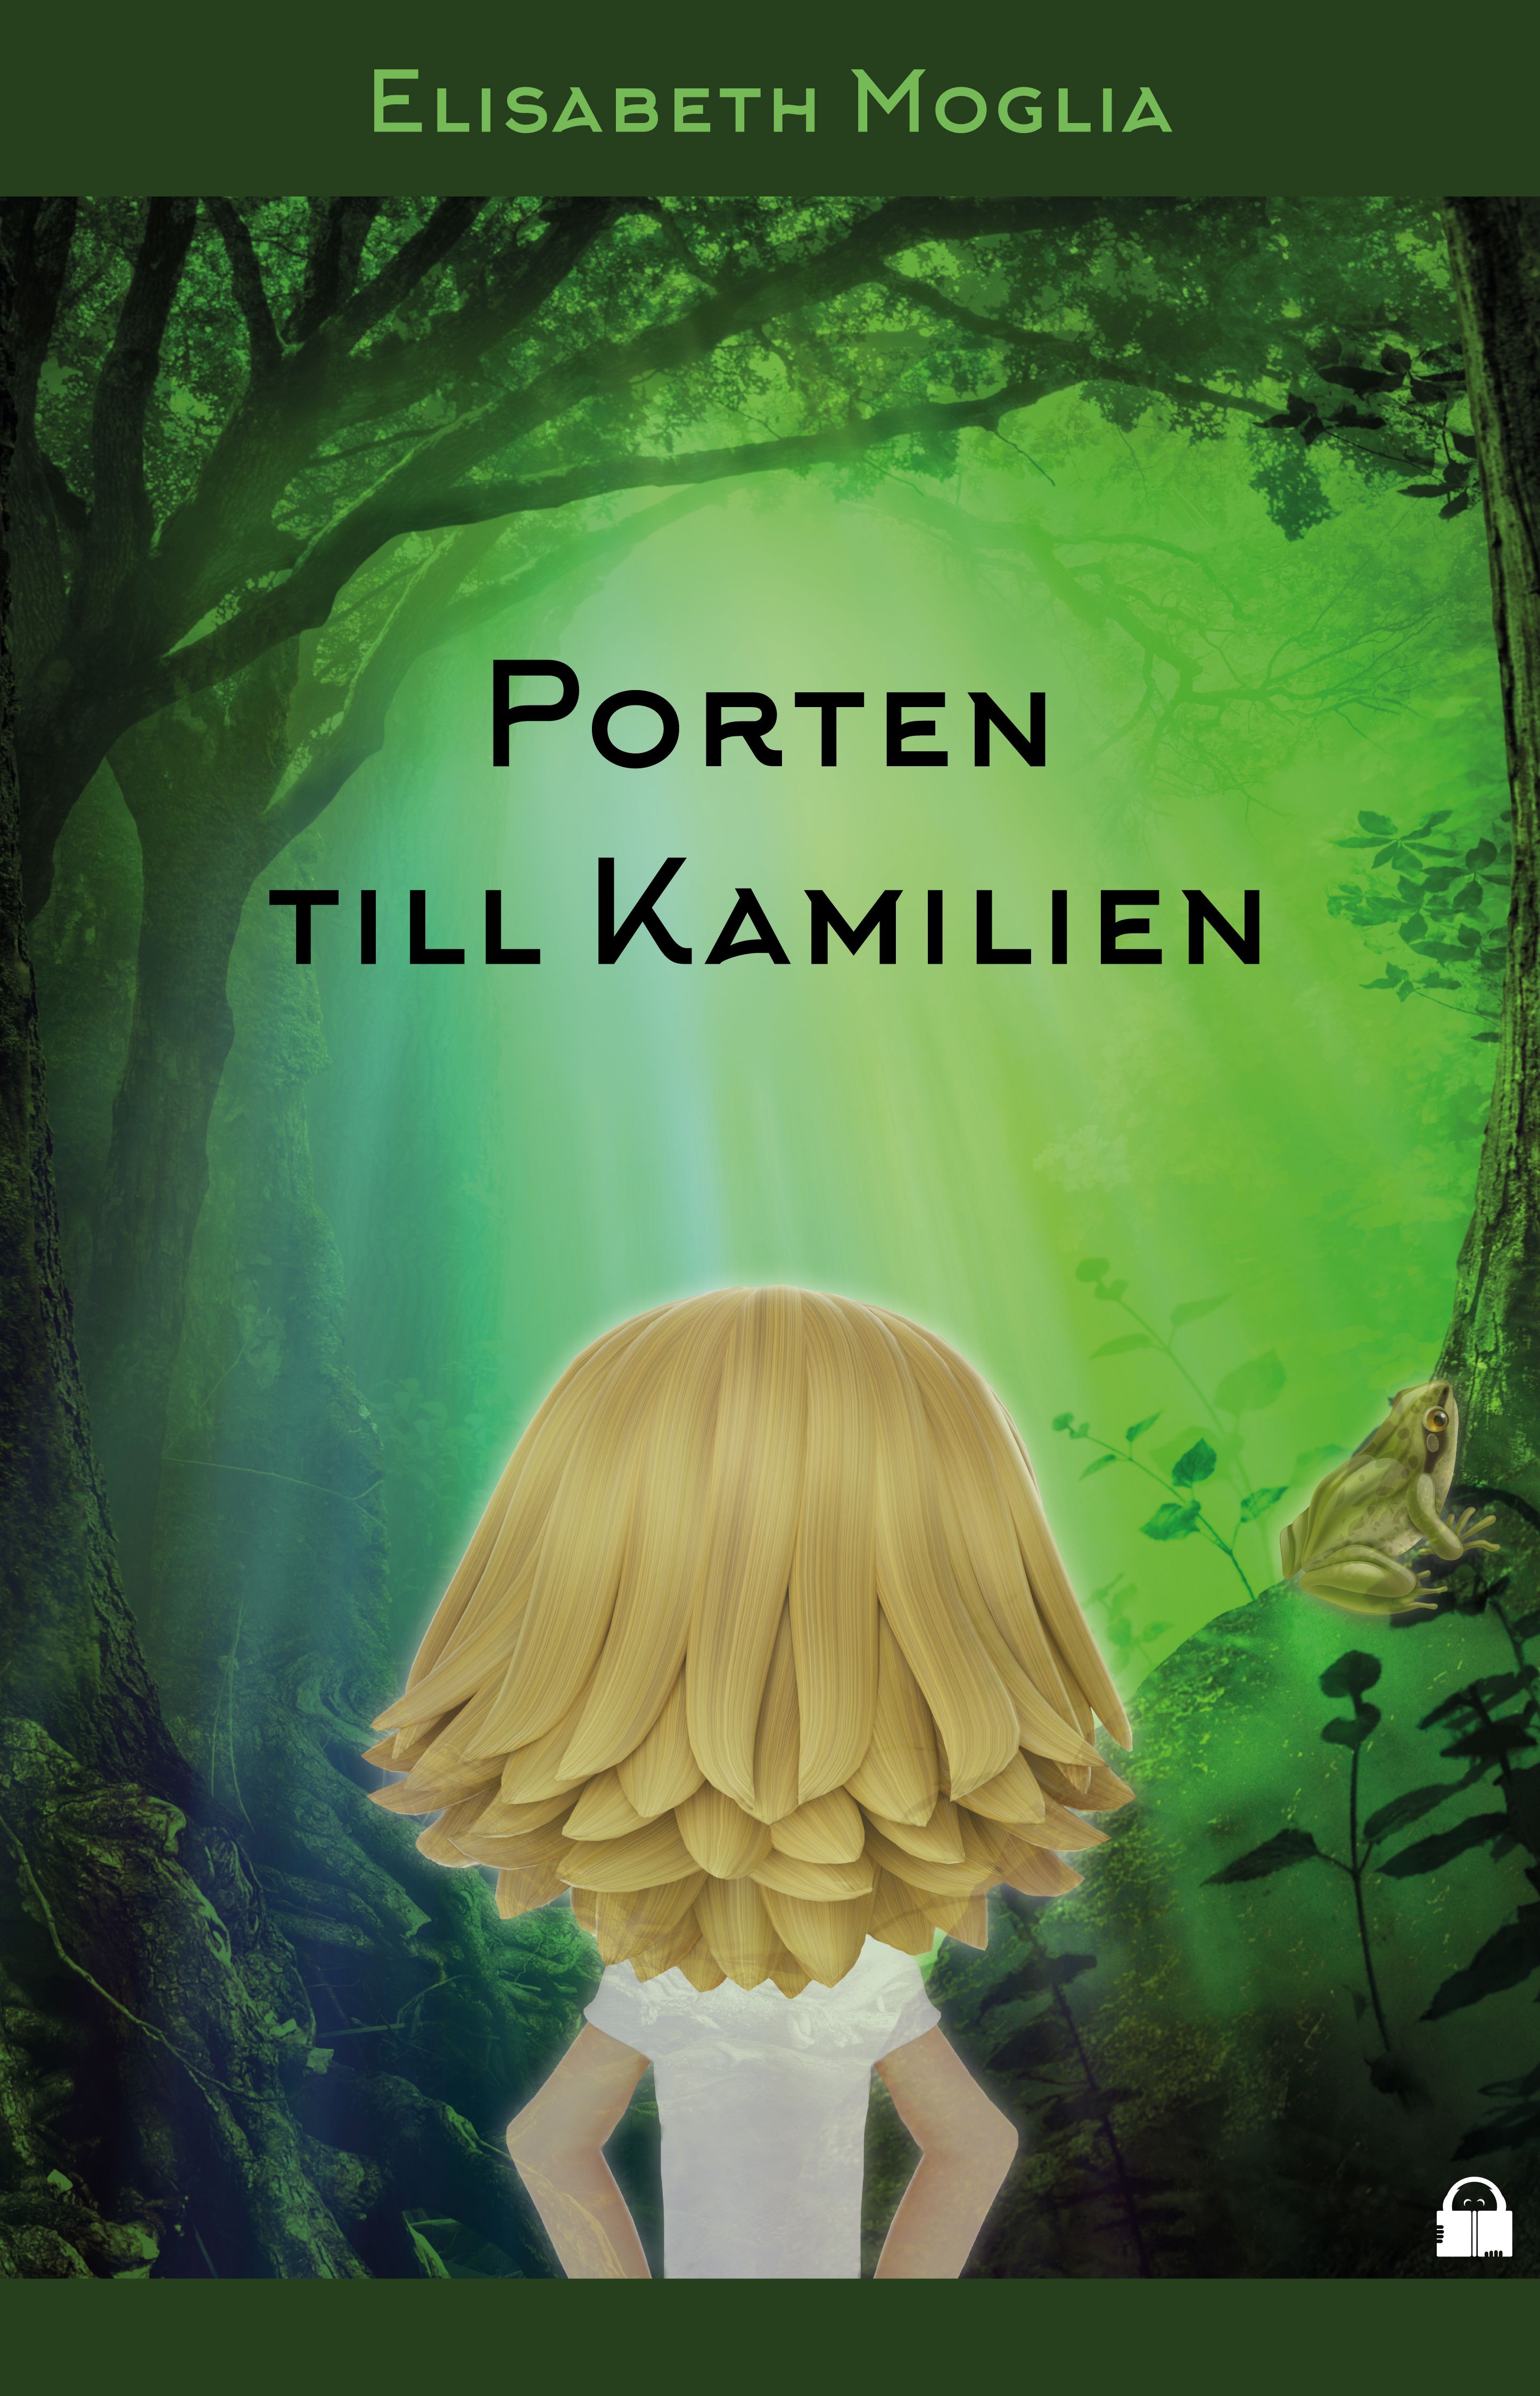 Porten till Kamilien, e-bok av Elisabeth Moglia